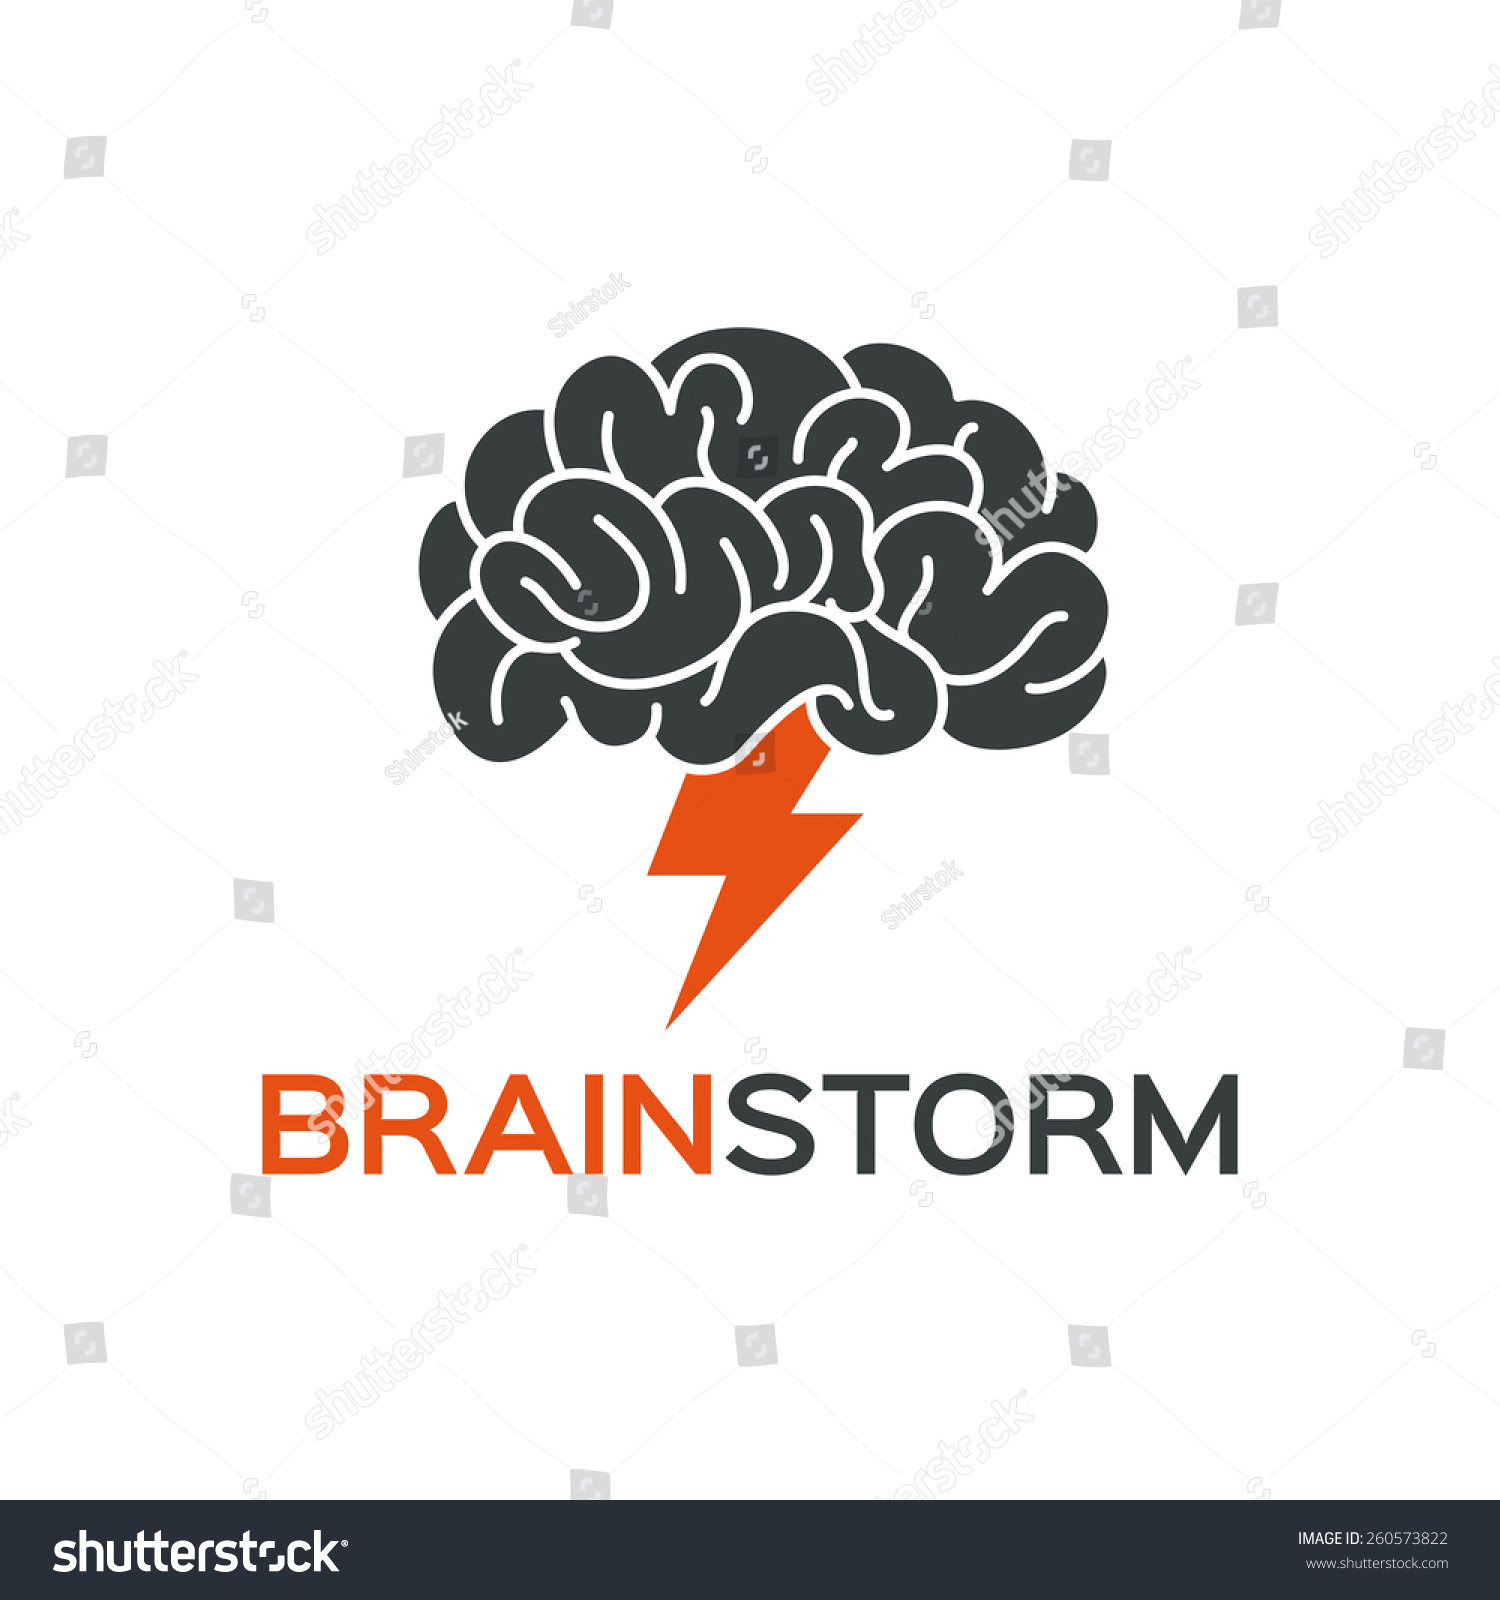 Brainstorming creative idea abstract icon. #260573822